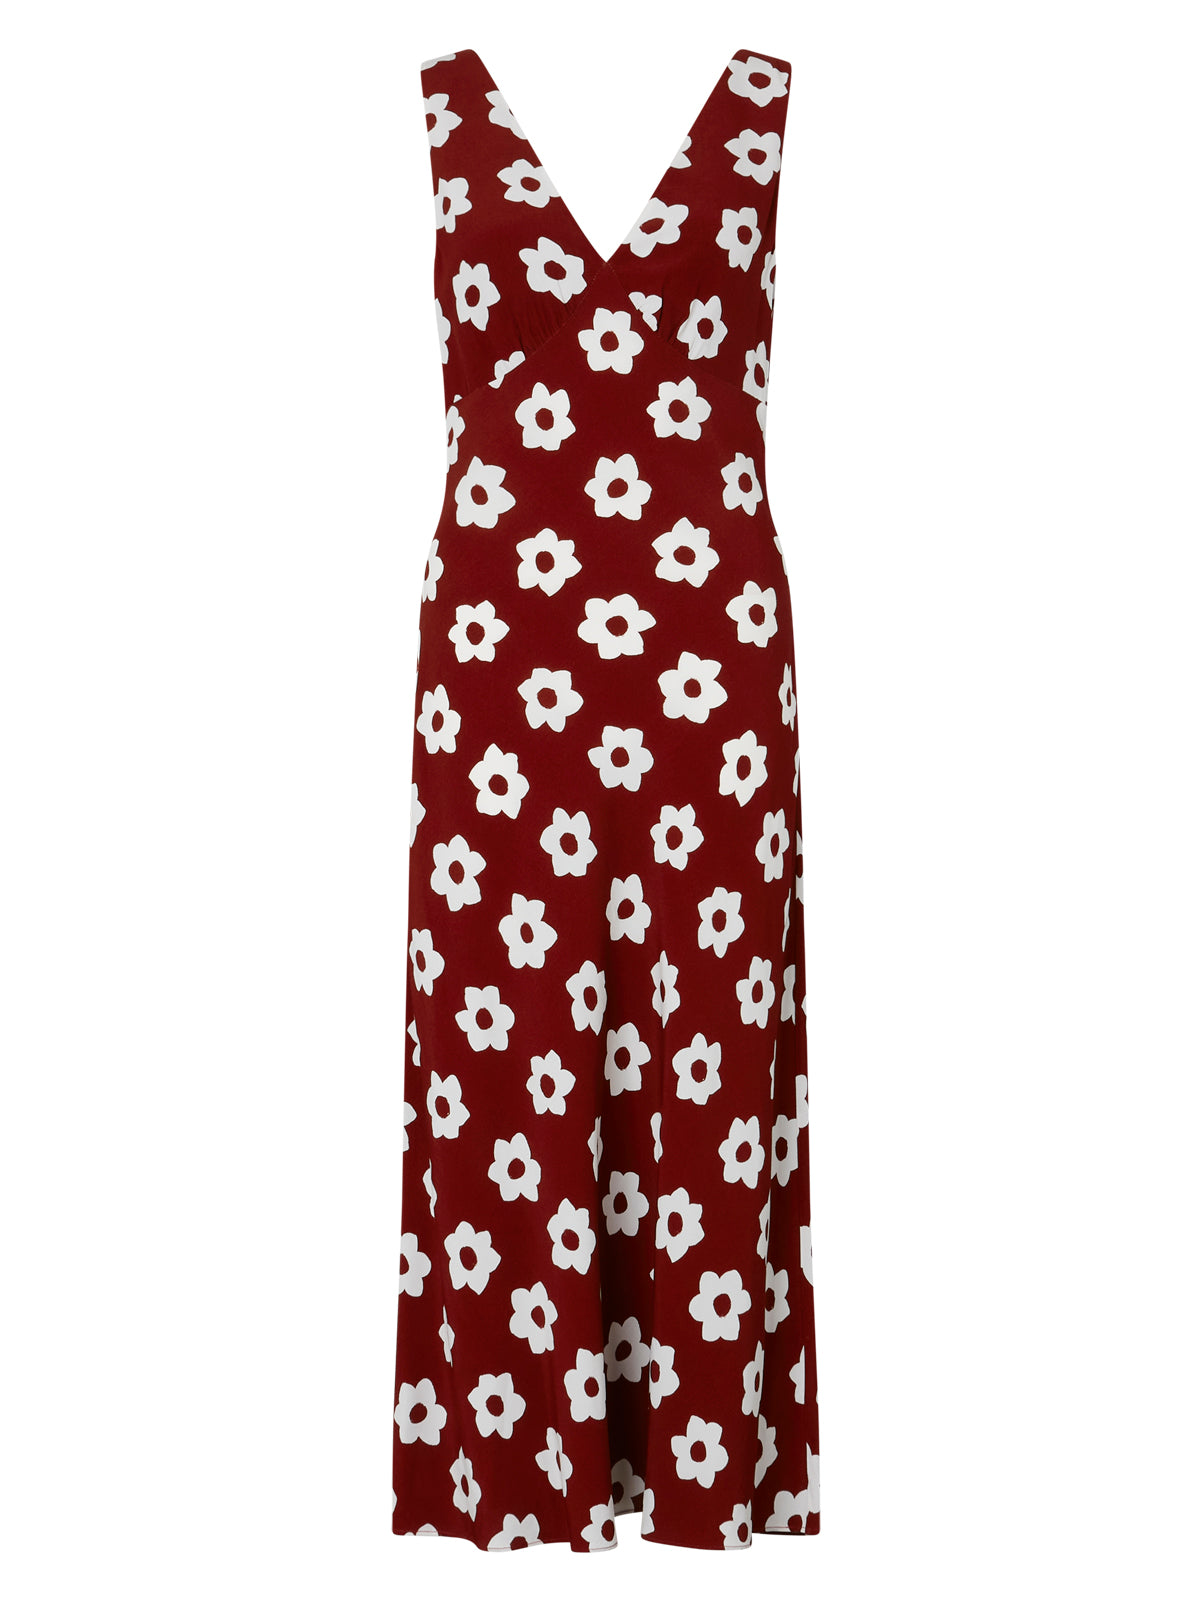 Claire Auburn Tiled Floral Slip Dress By KITRI Studio